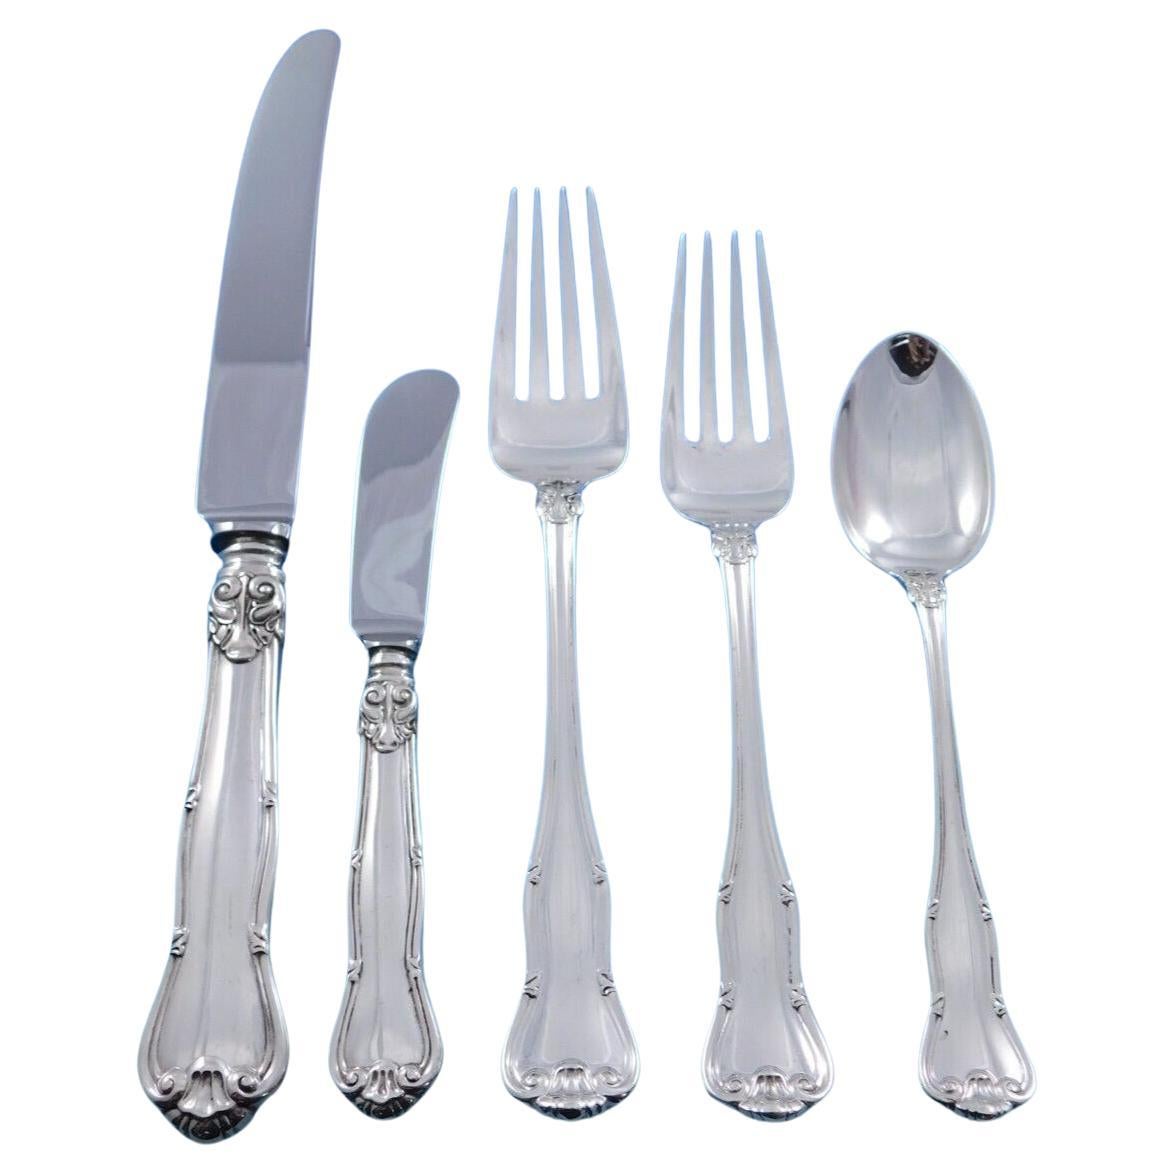 Provence by Tiffany & Co. Sterling Silver Flatware Set 12 Service 60 pcs Dinner